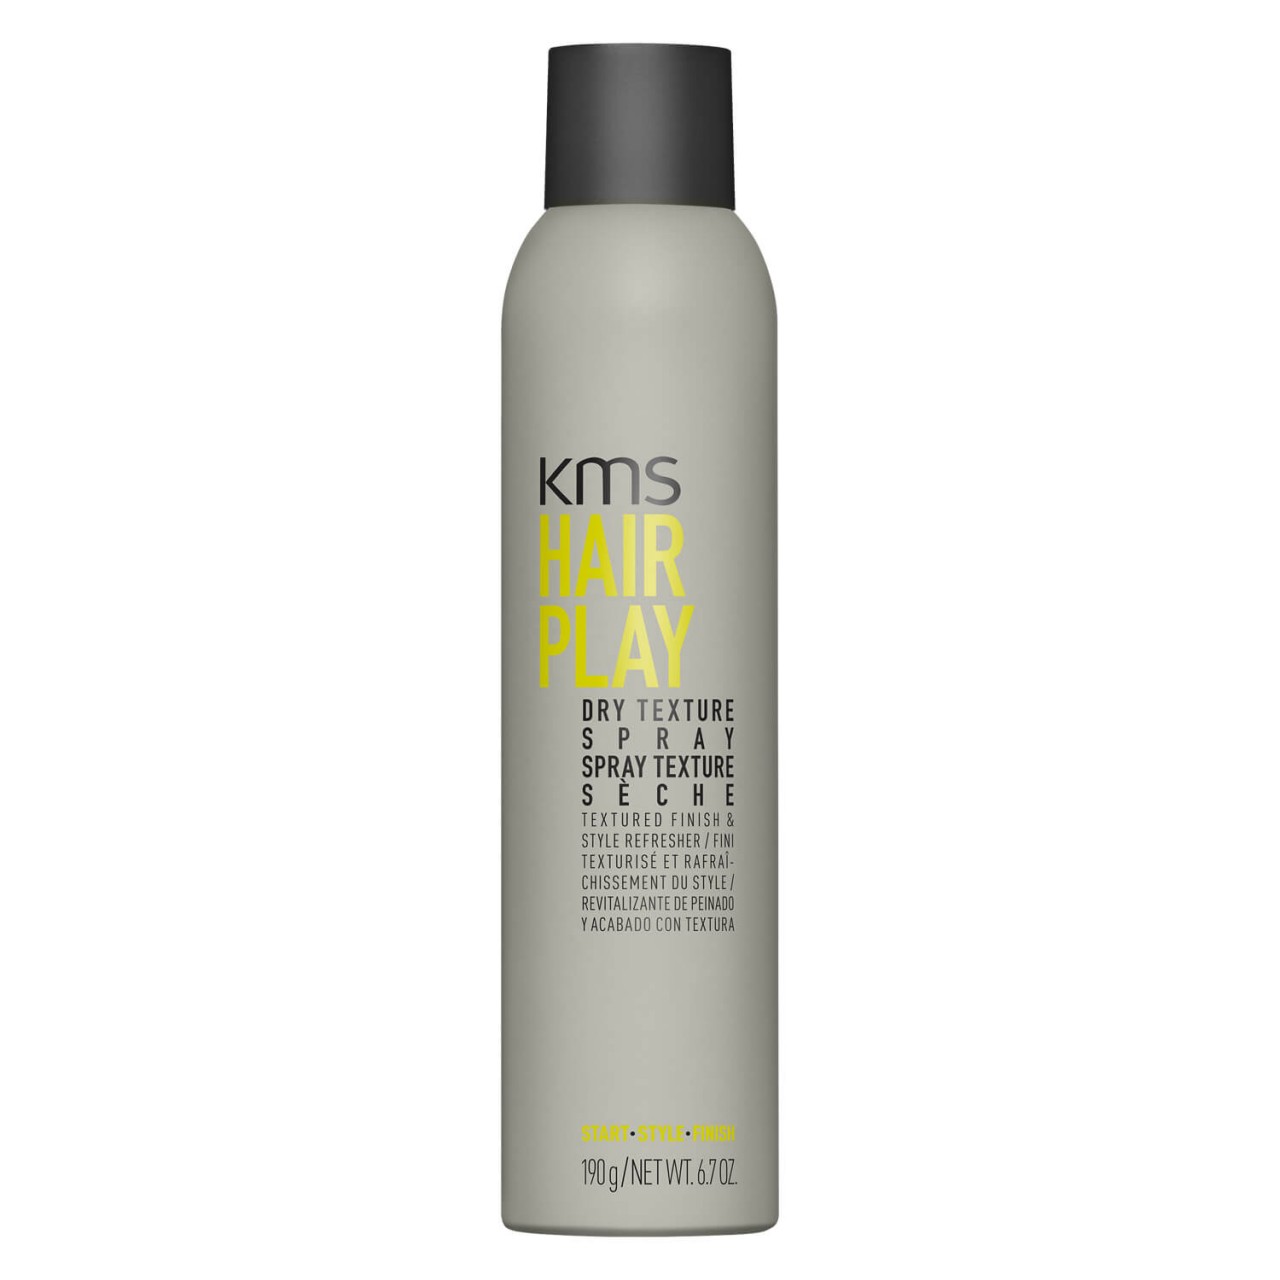 Hairplay Dry Texture Spray von KMS